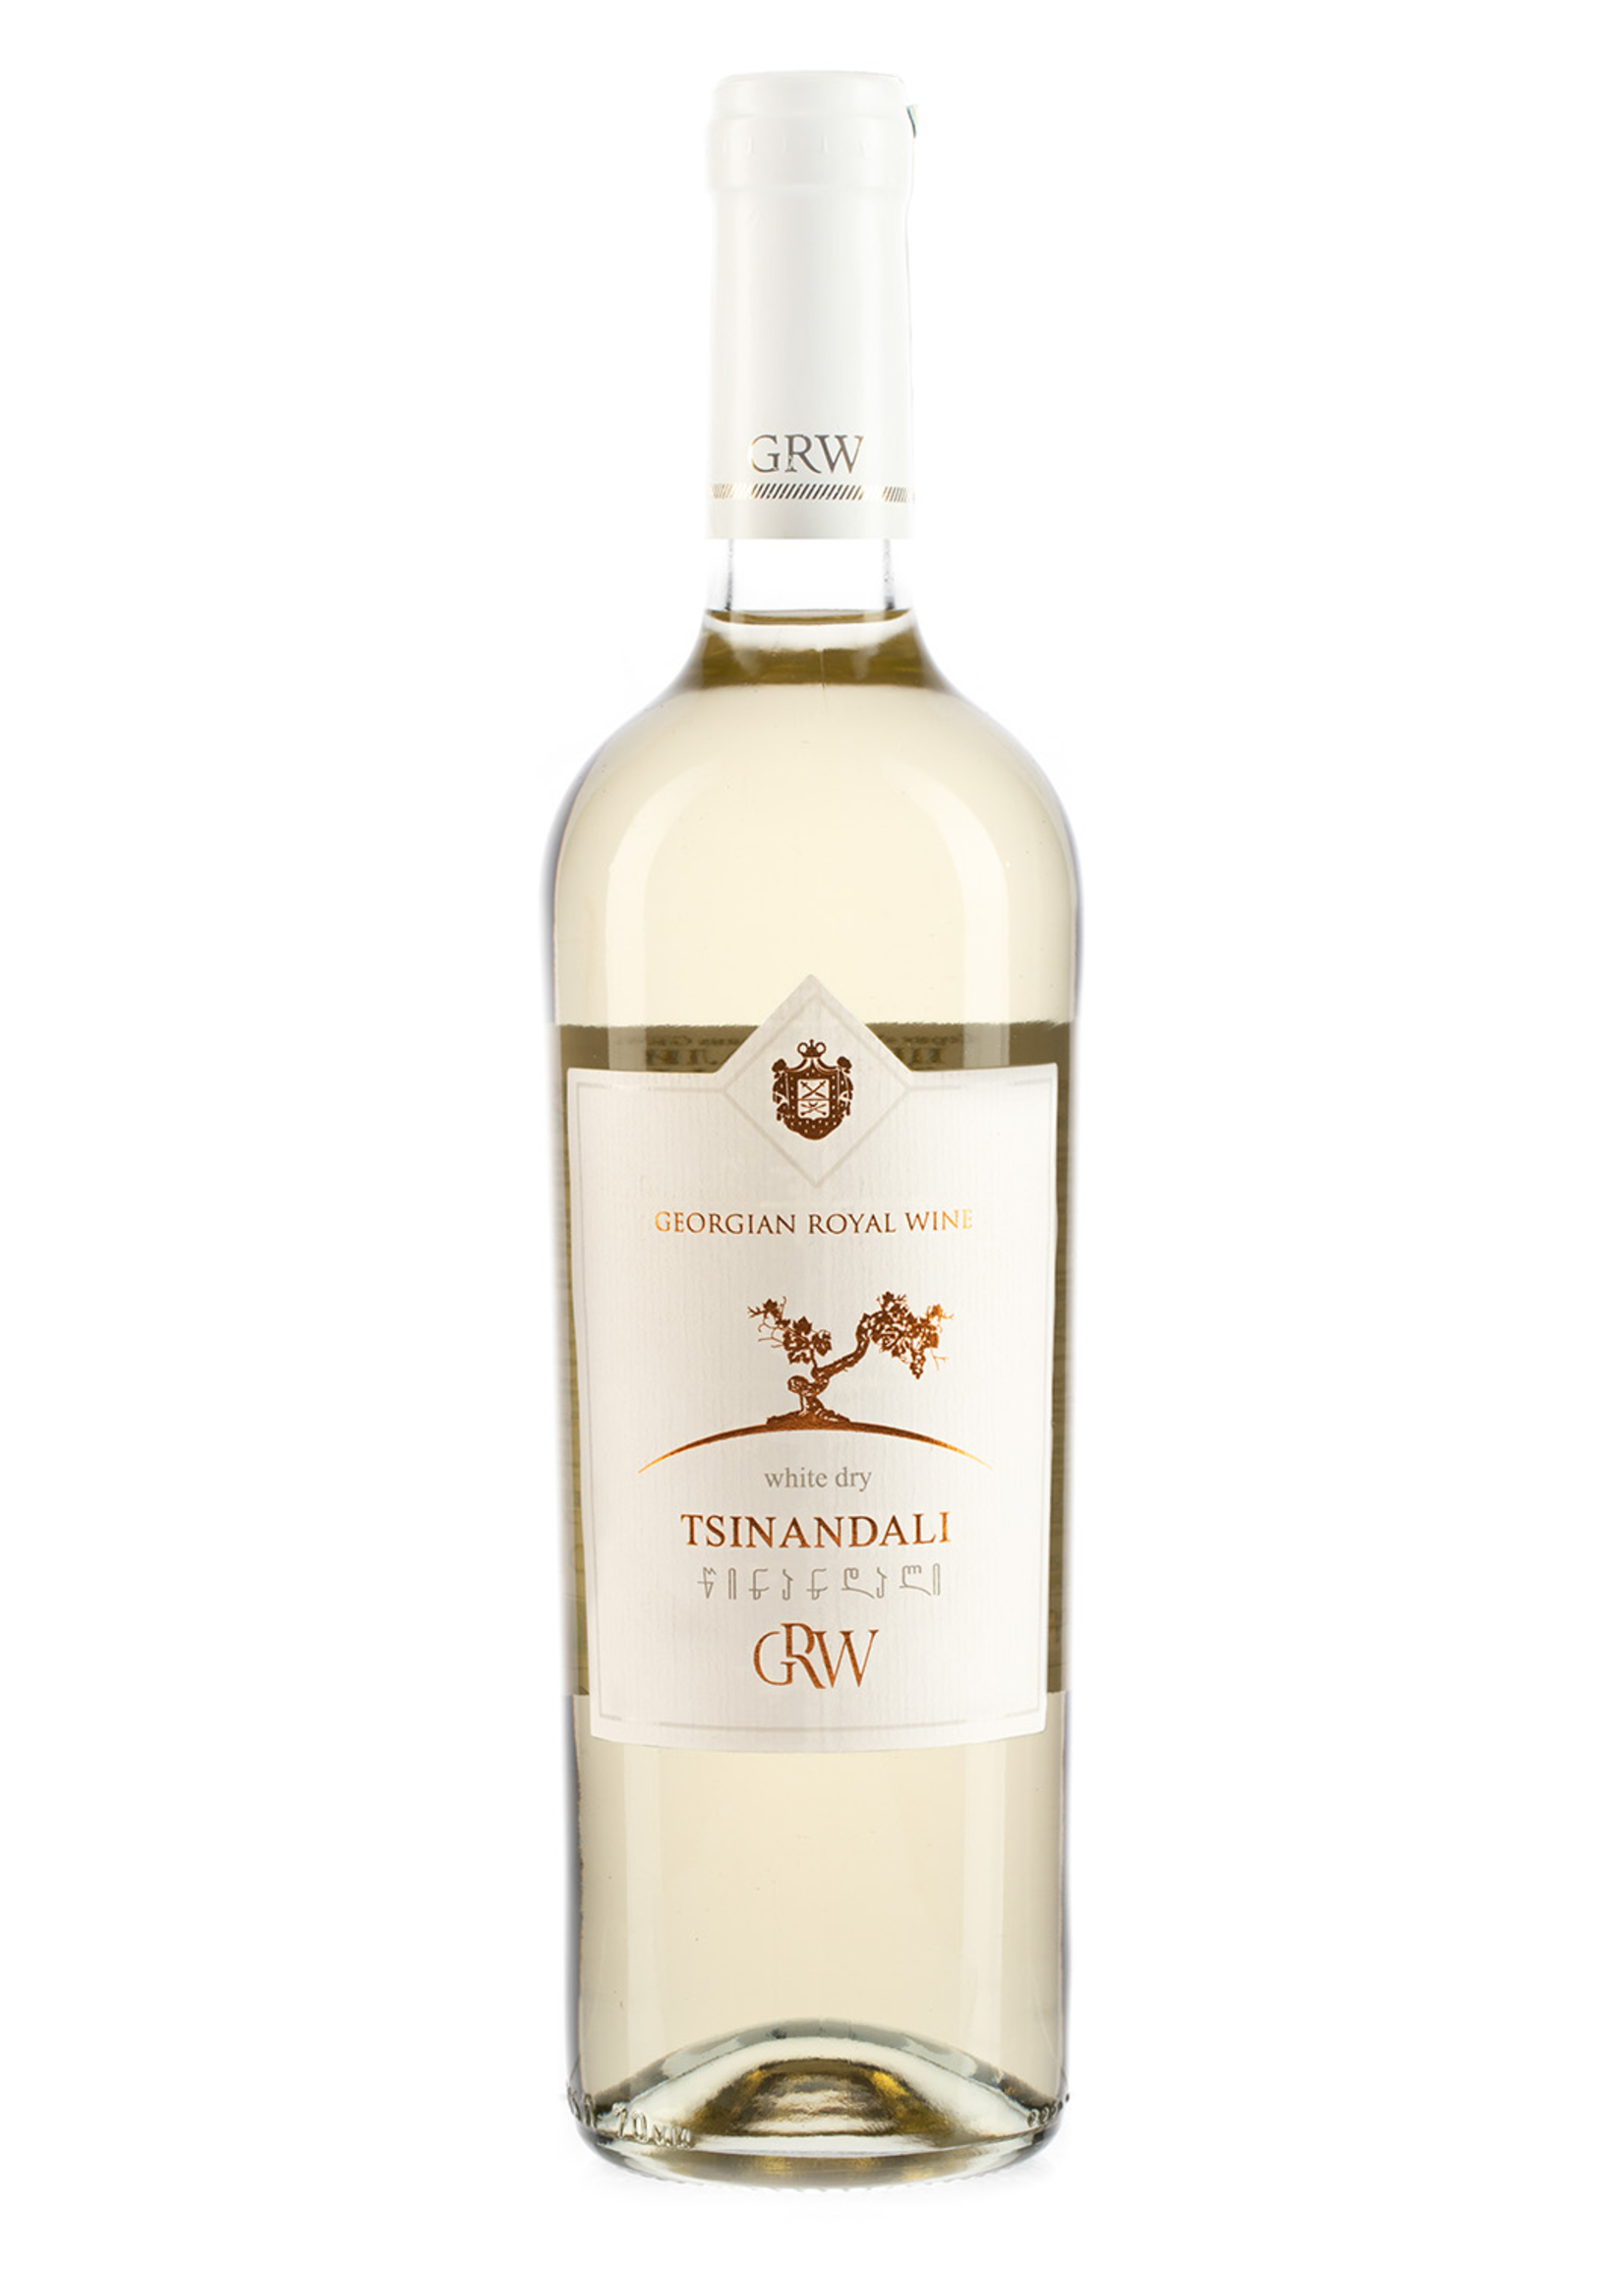 GRW GRW / Georgia Royal Wines Tsinandali White Dry 2020 / 750mL